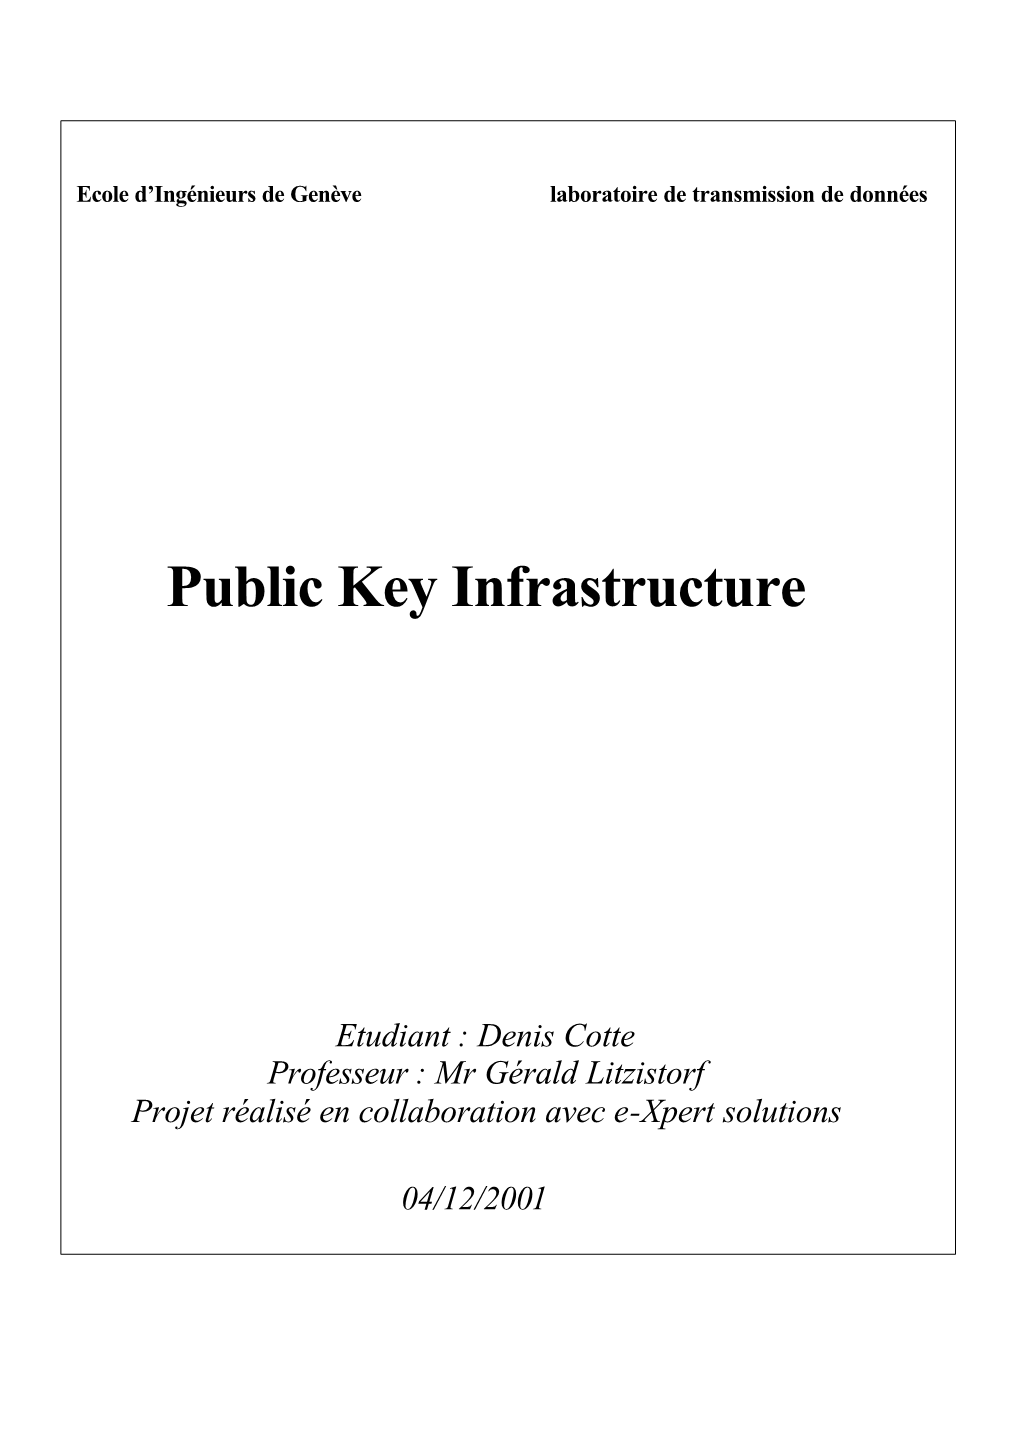 Public Key Infrastructure